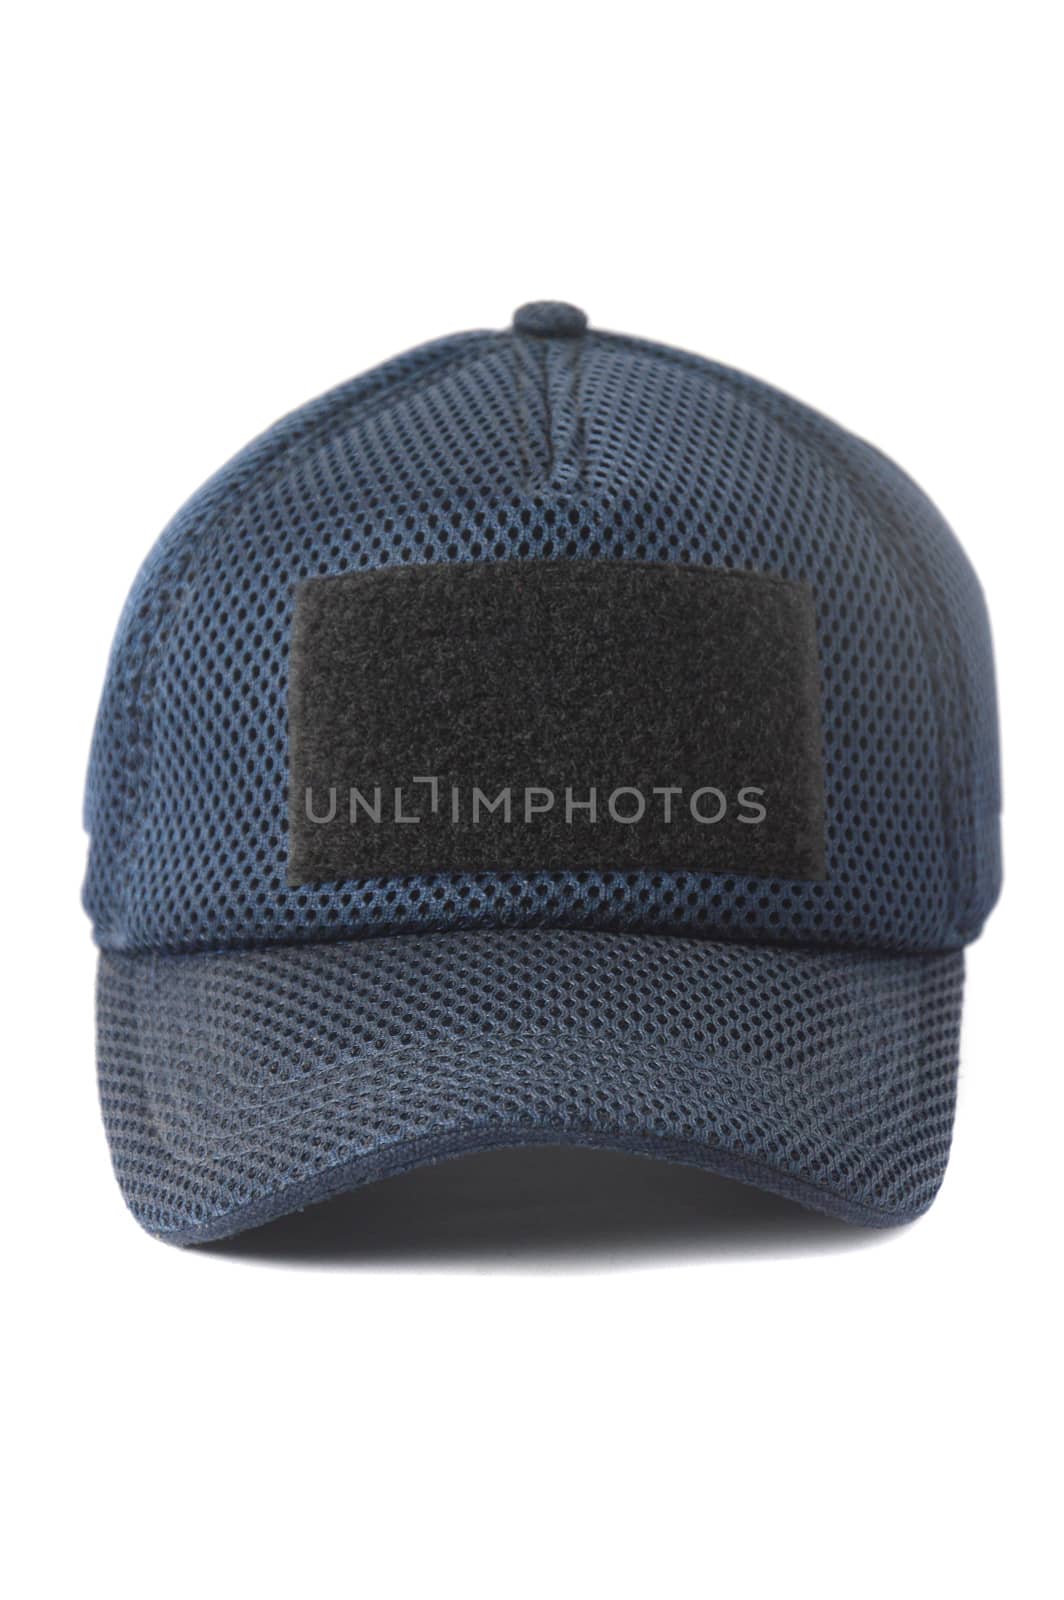 blue cap on white background